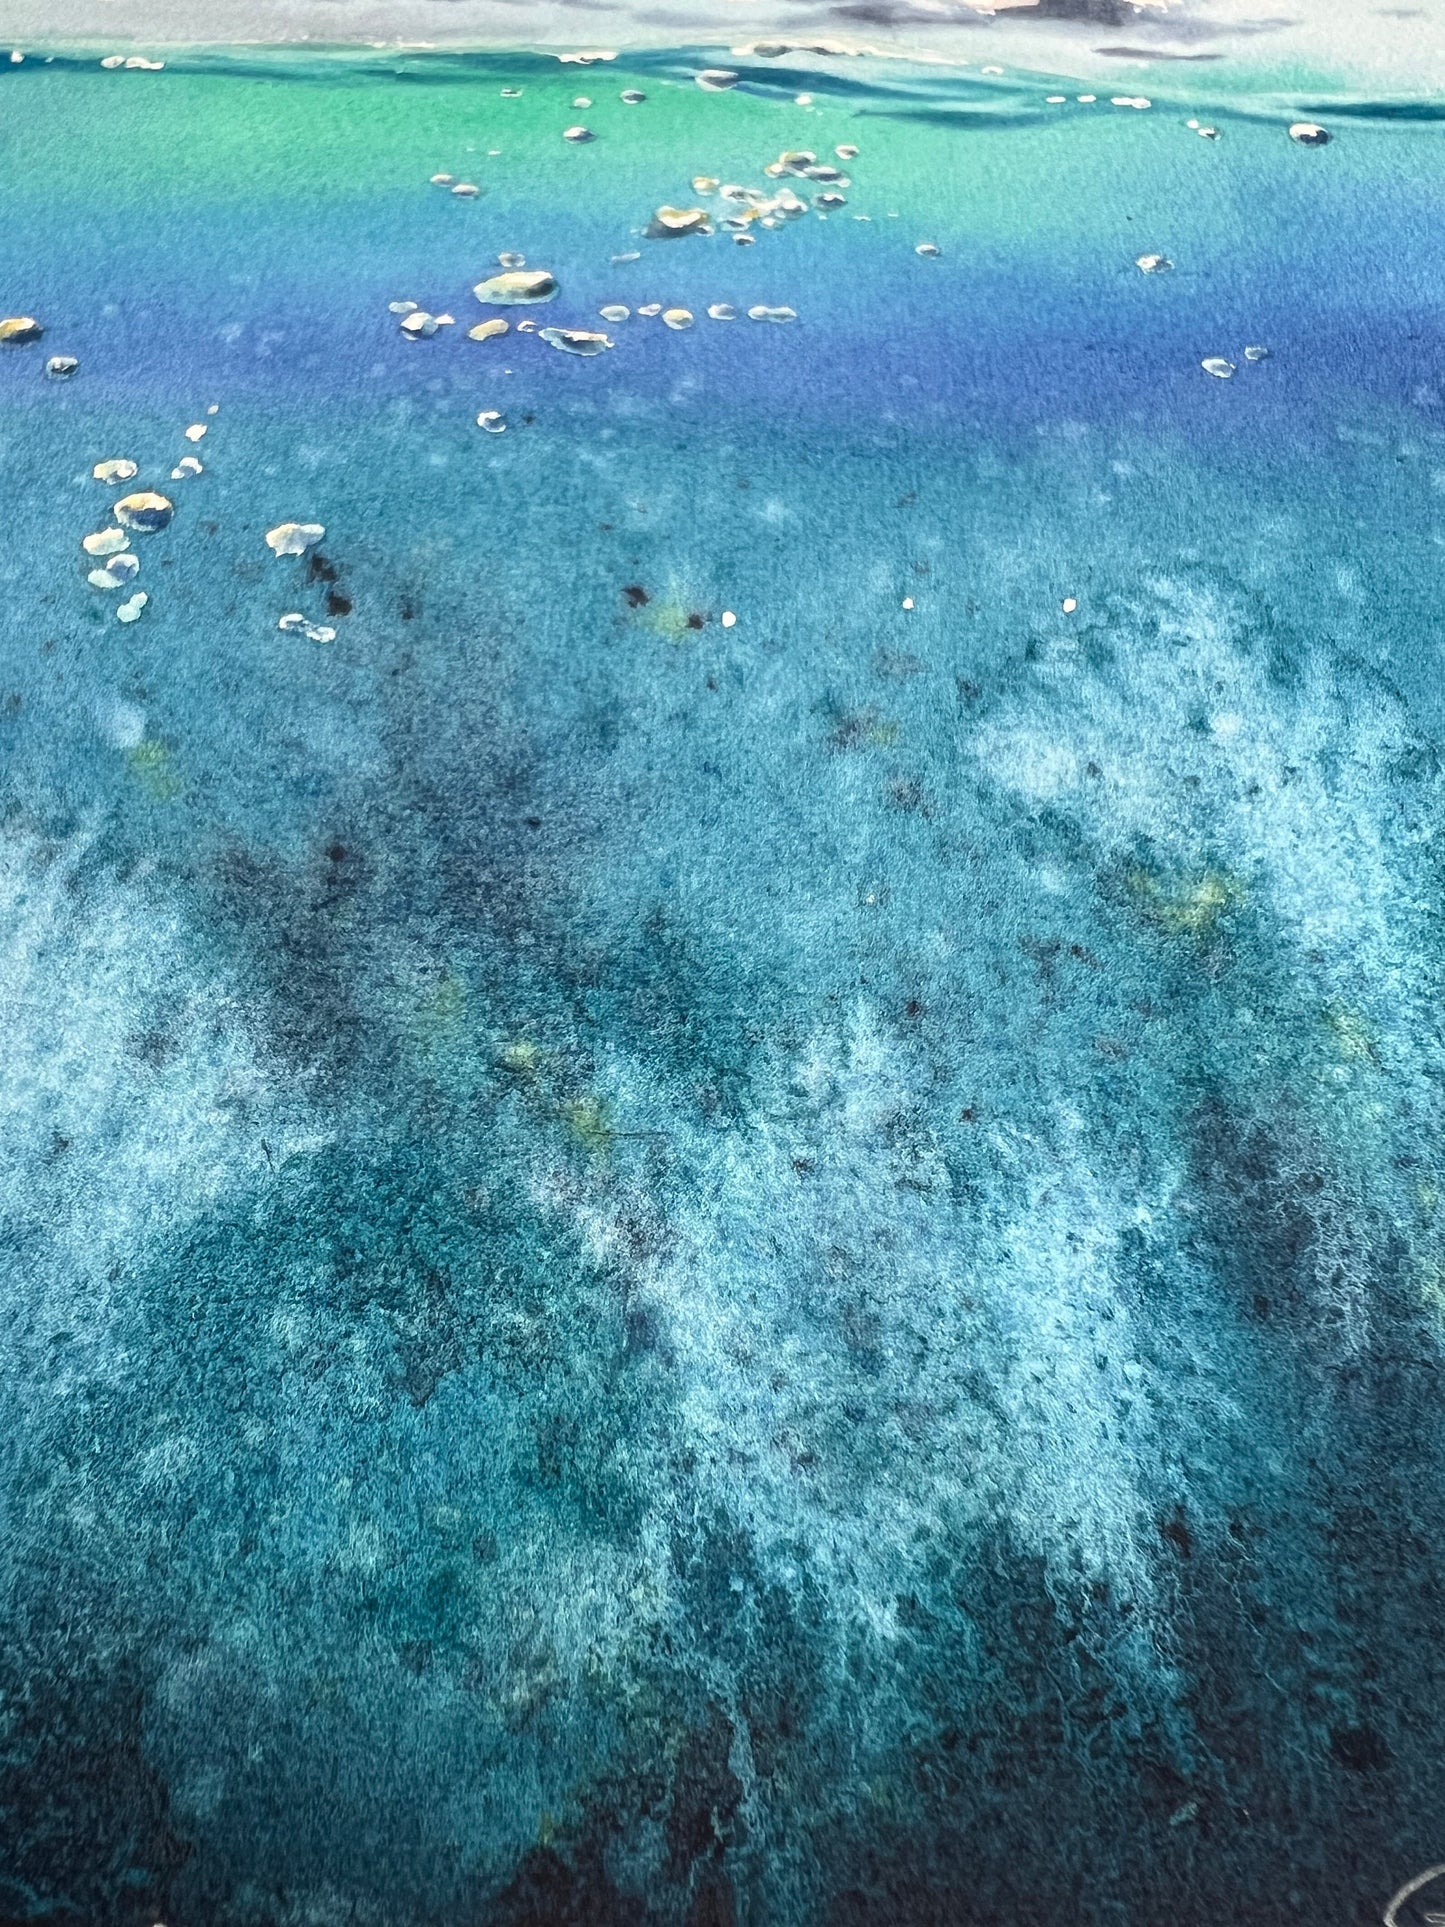 Snorkelling Painting, Watercolour Original Art, Ocean Wave Art, Underwater Sea Bubbles, Coastal Home Wall Decor, Gift